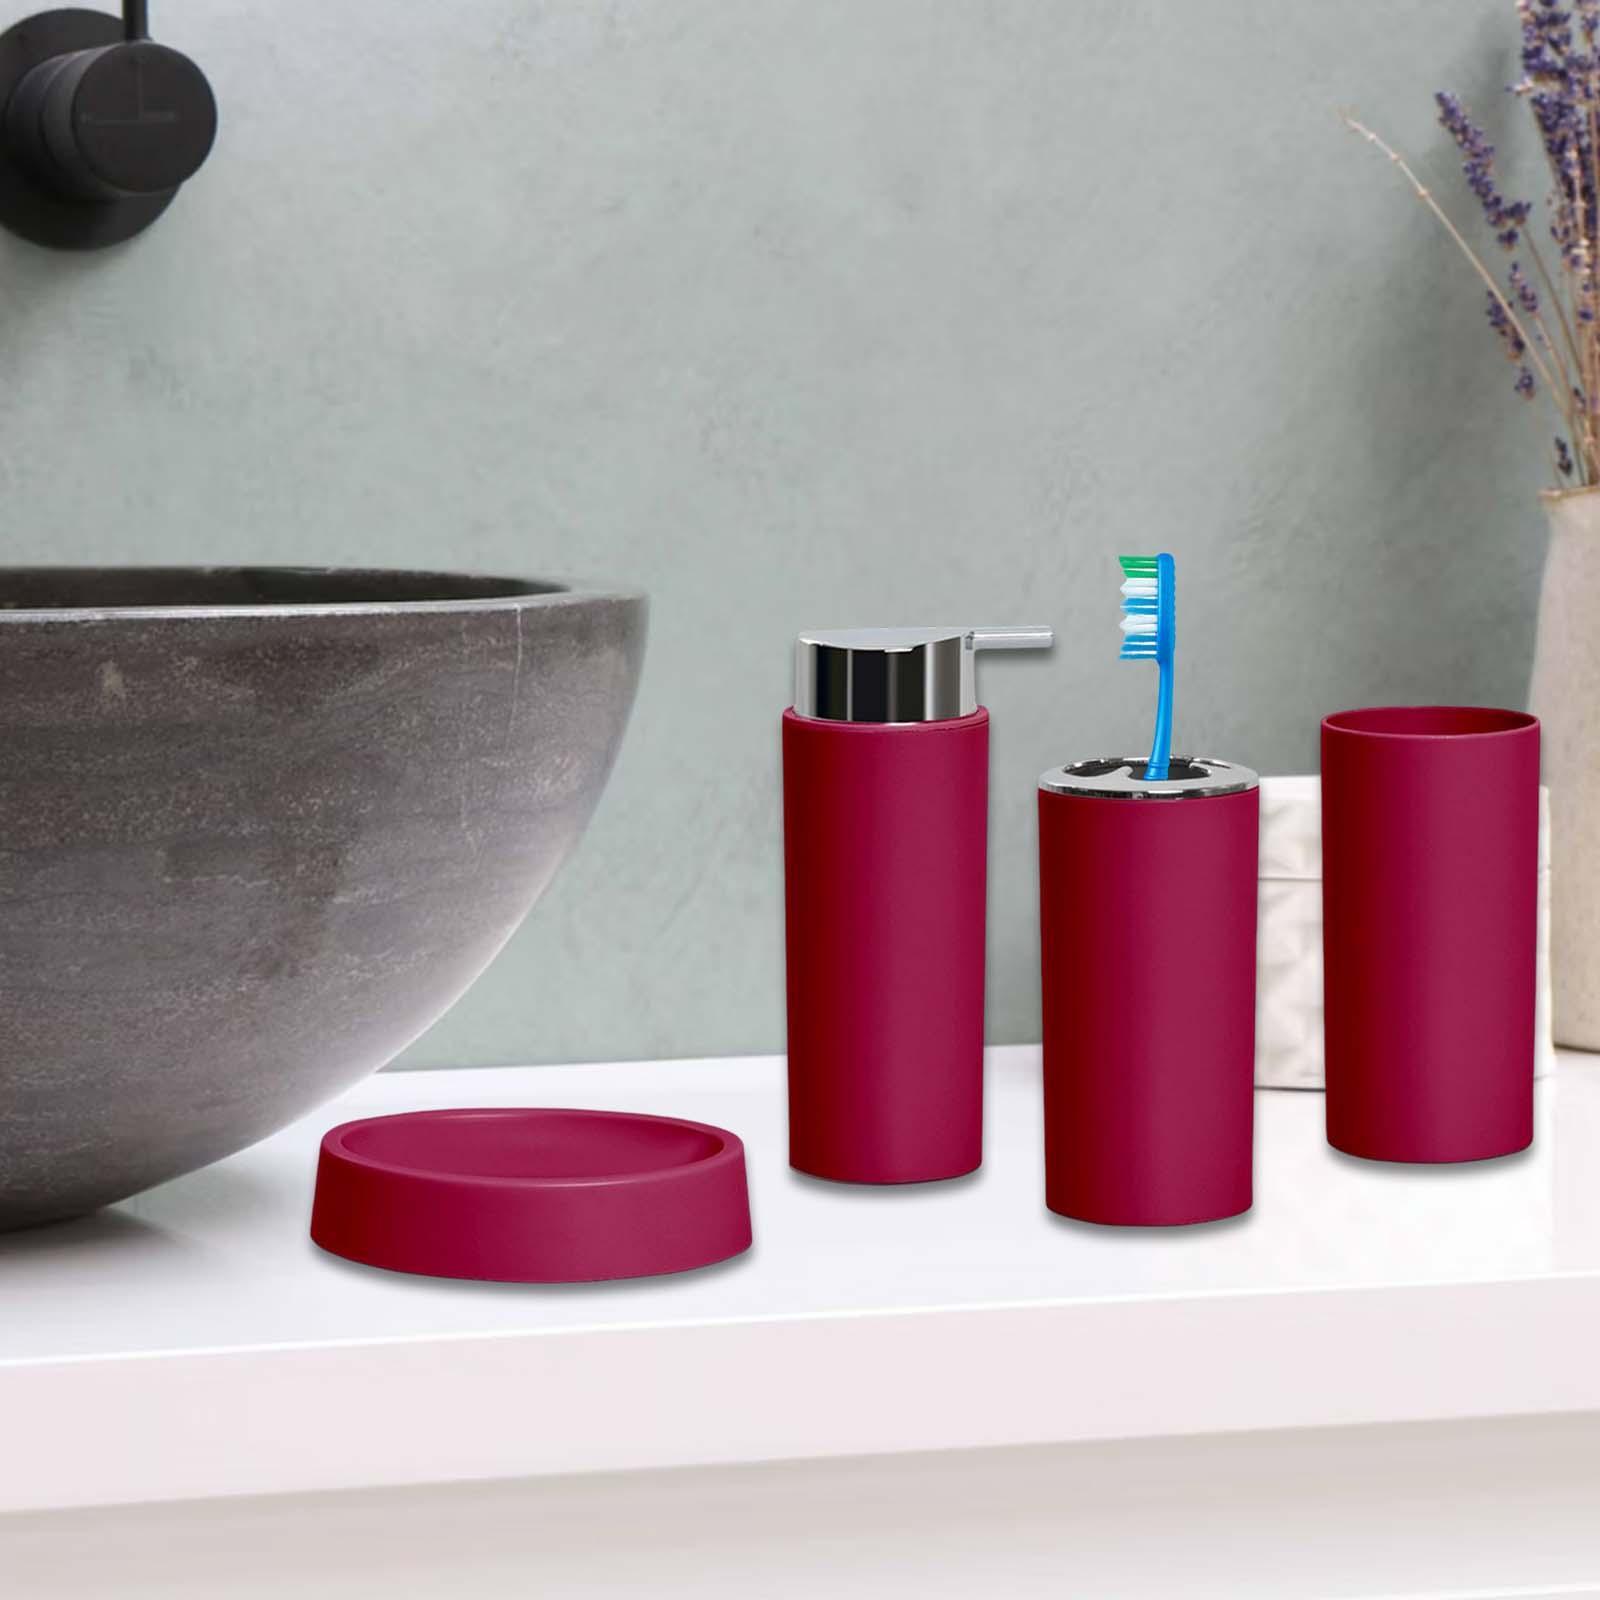 4 Pieces Plastic Bathroom Accessories Set for Countertop Bathroom Toilet